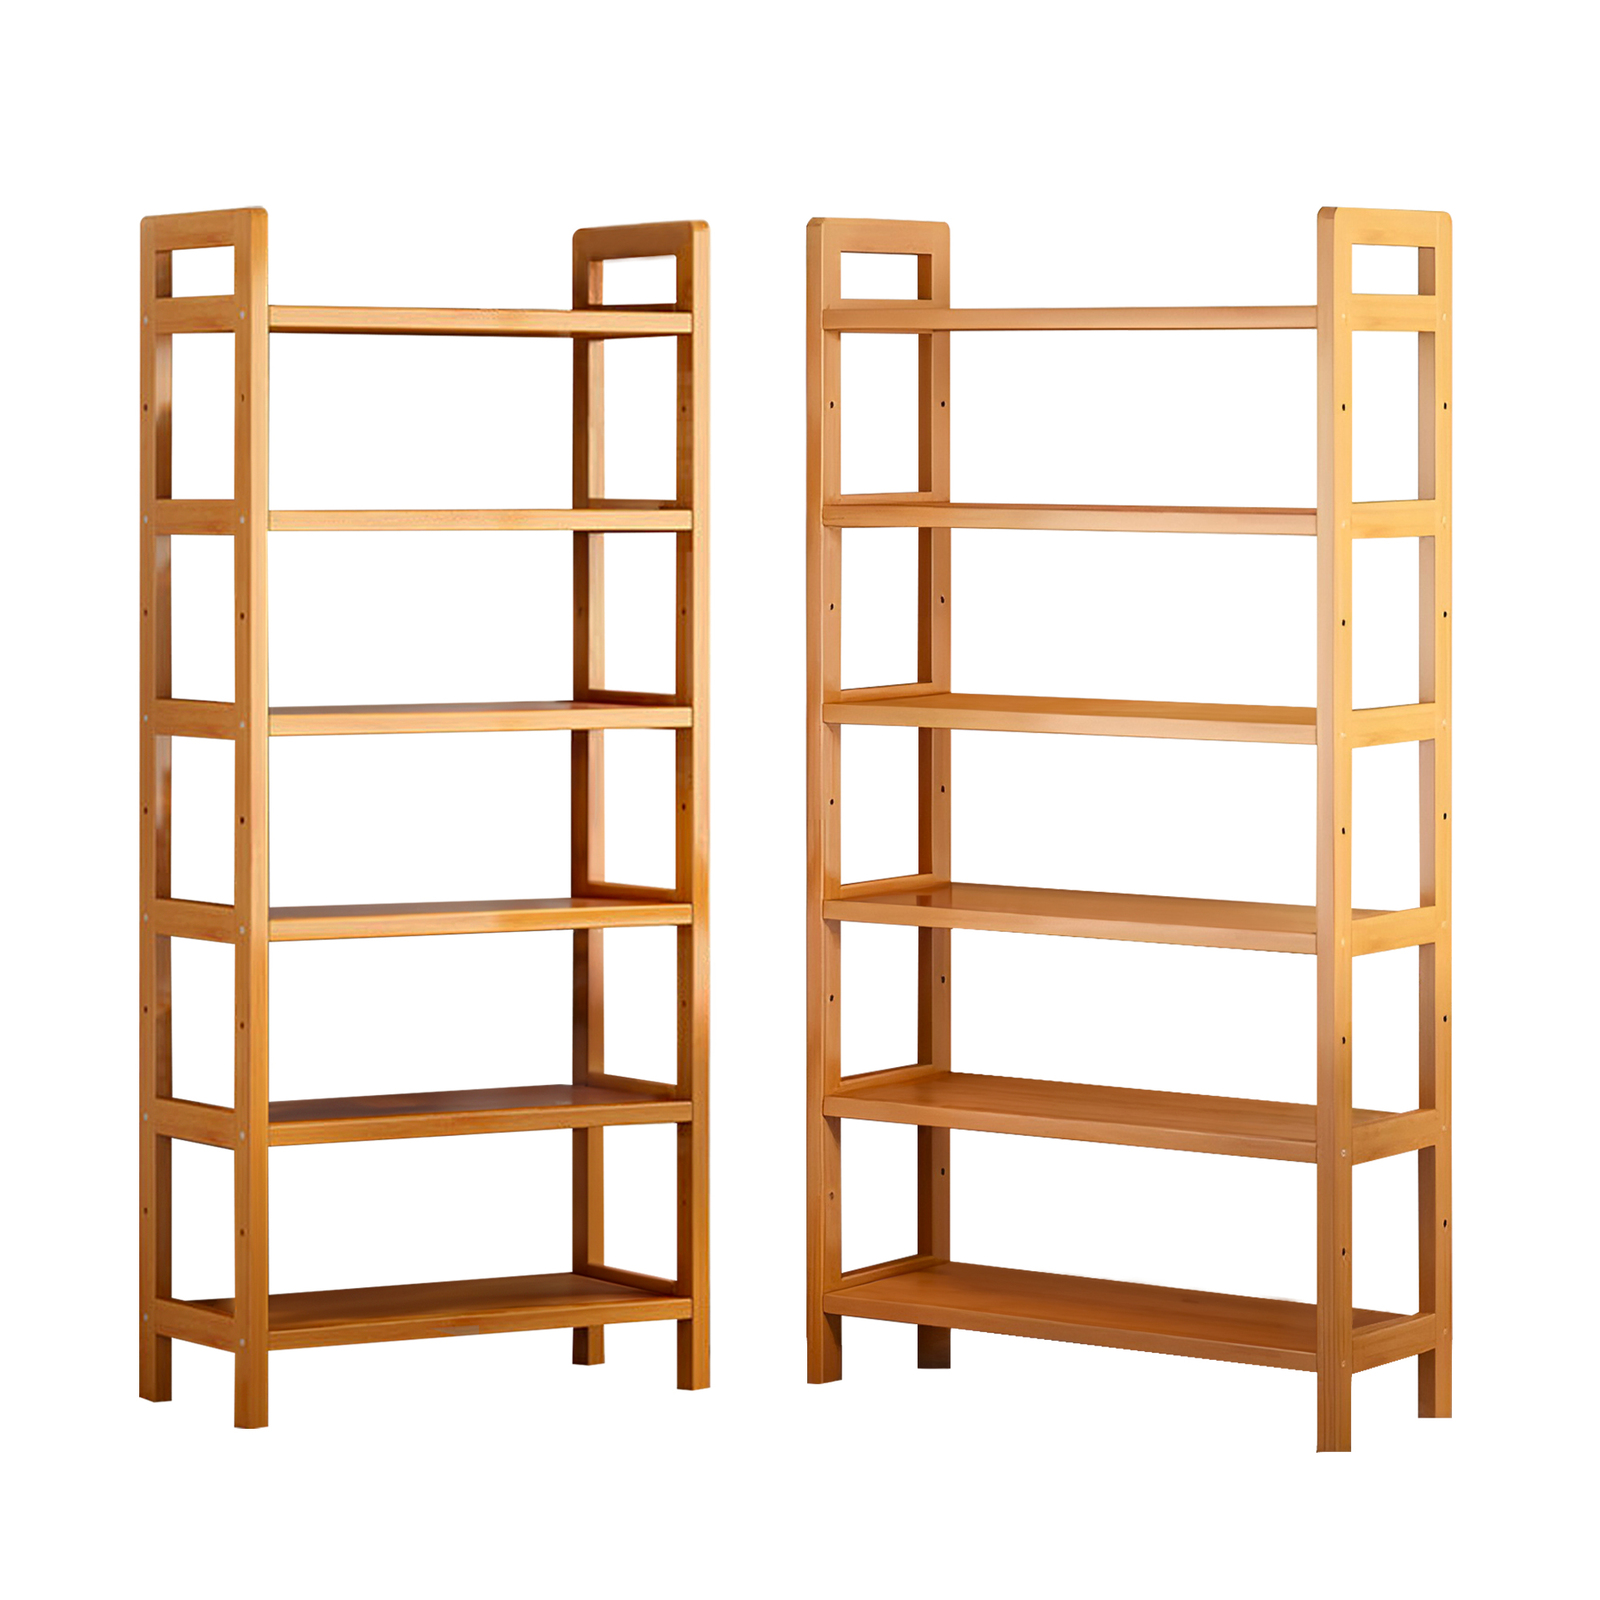 6 Tier Bamboo Wood Display Shelf Bookshelf Storage Rack Stand